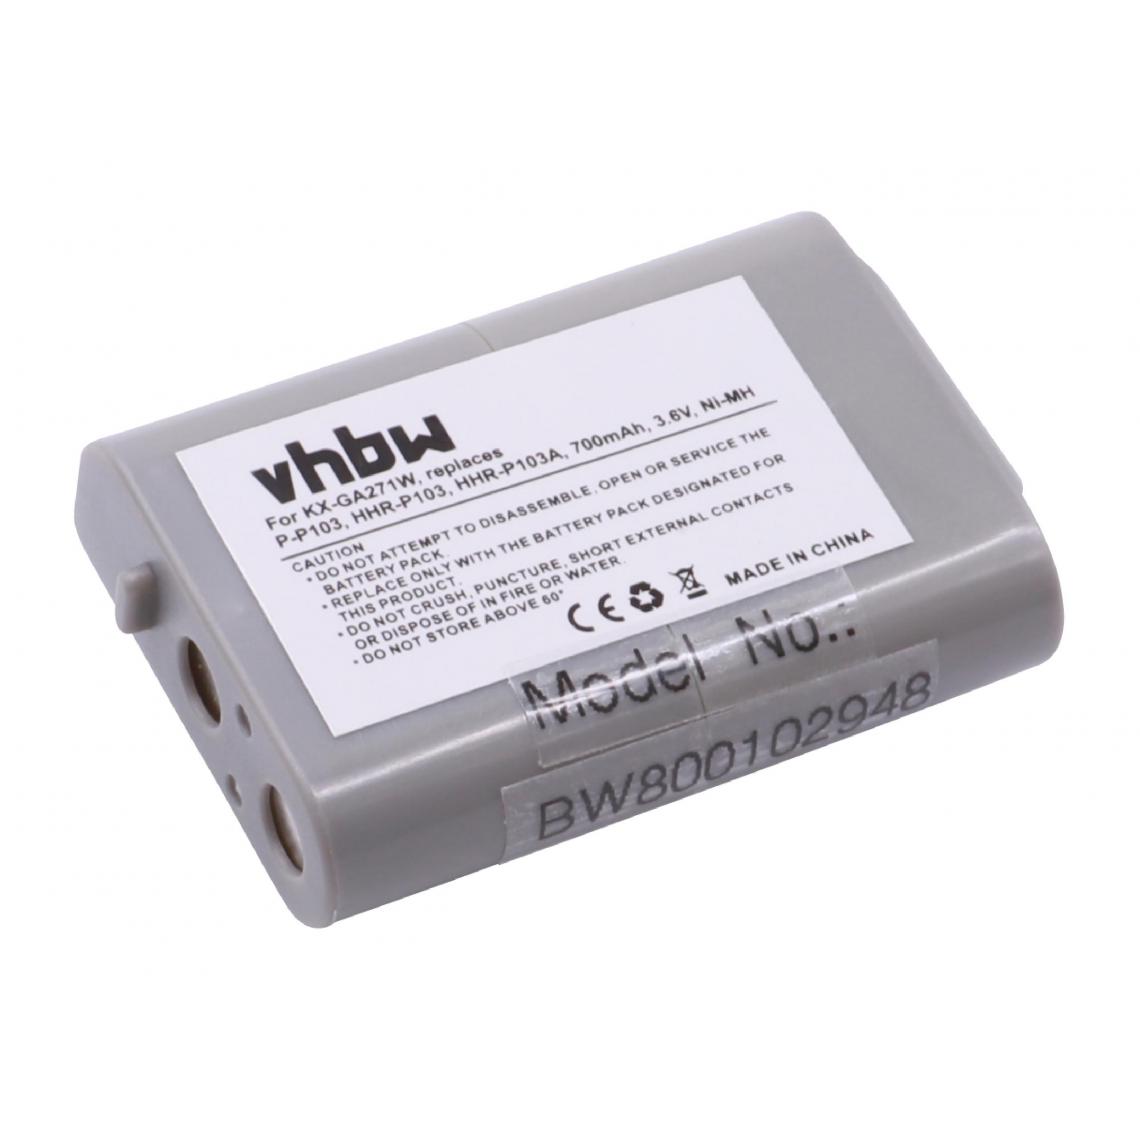 Vhbw - vhbw Batterie compatible avec Panasonic STB103, TG2382, TG272, TG3252, TGA230, TGA271 téléphone fixe sans fil (700mAh, 3,6V, NiMH) - Batterie téléphone